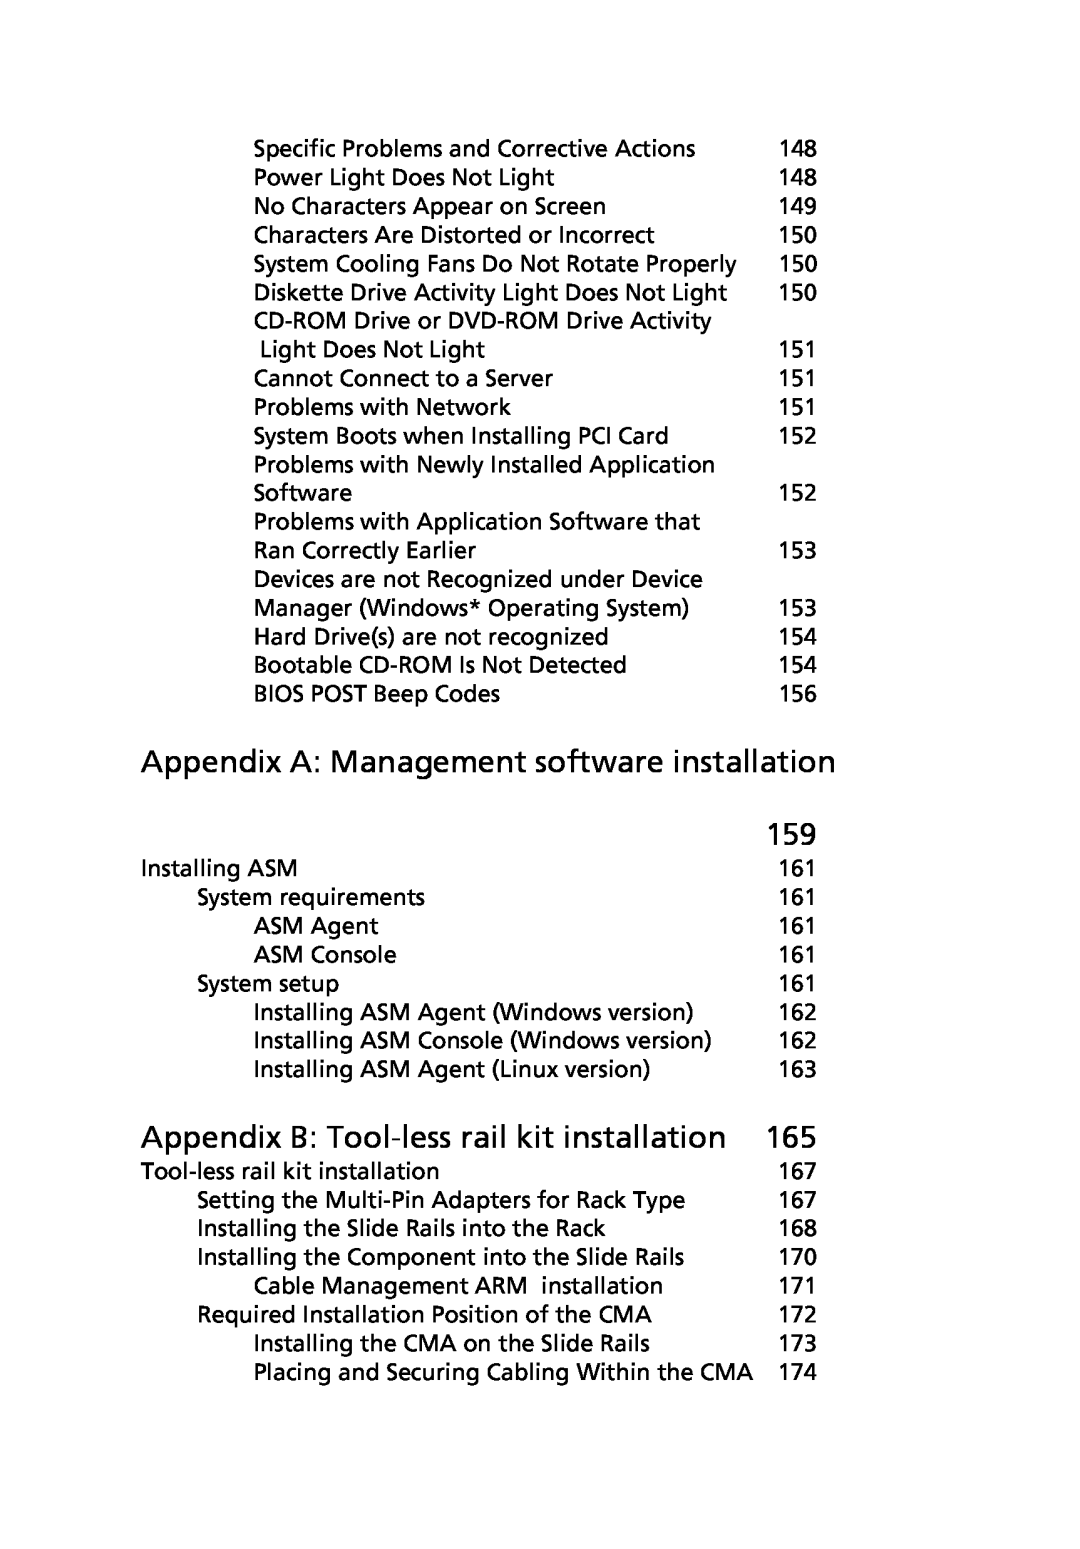 Acer Altos R710 manual Appendix A Management software installation, Appendix B Tool-less rail kit installation 